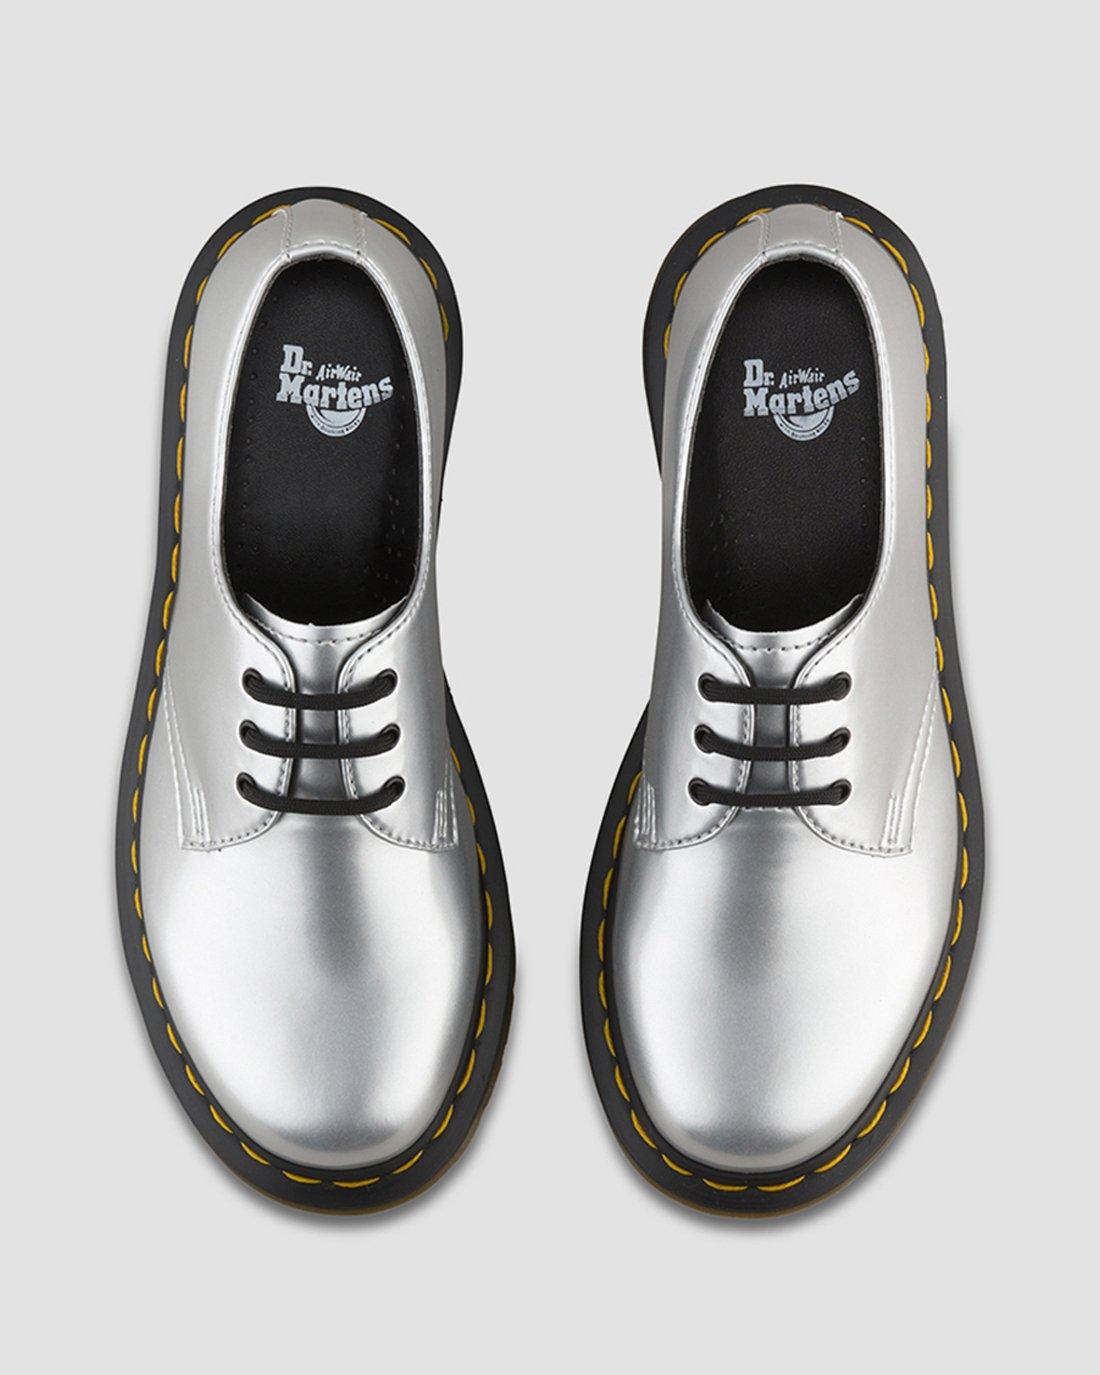 Martens1461 Metallic Chrome Silver Vegan Leather 3-Eye Oxford Shoes 24864040 Dr 